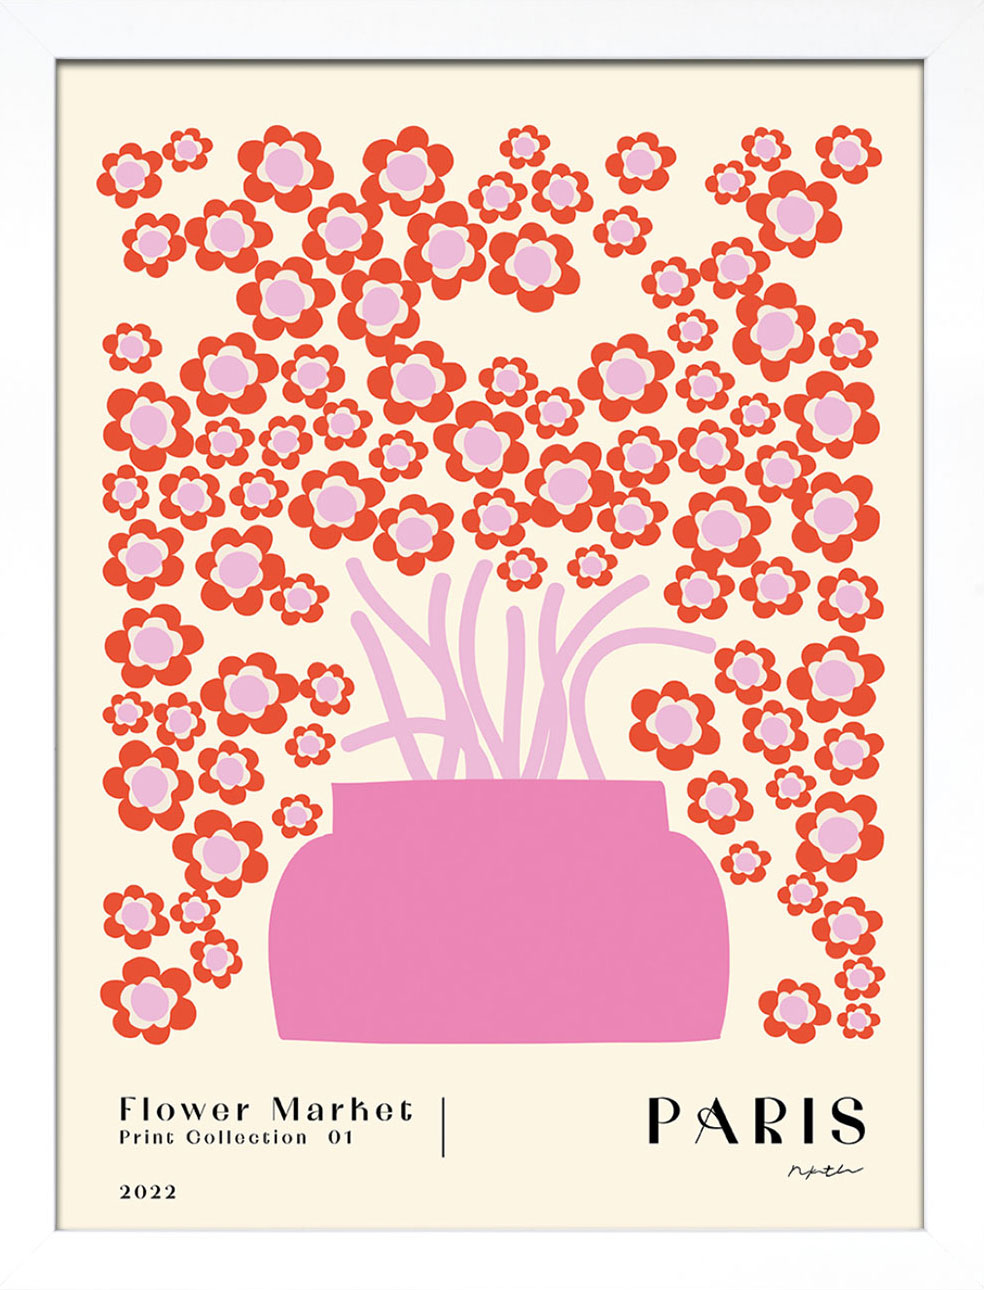 NKTN (Flower Market - Paris) Art Prints